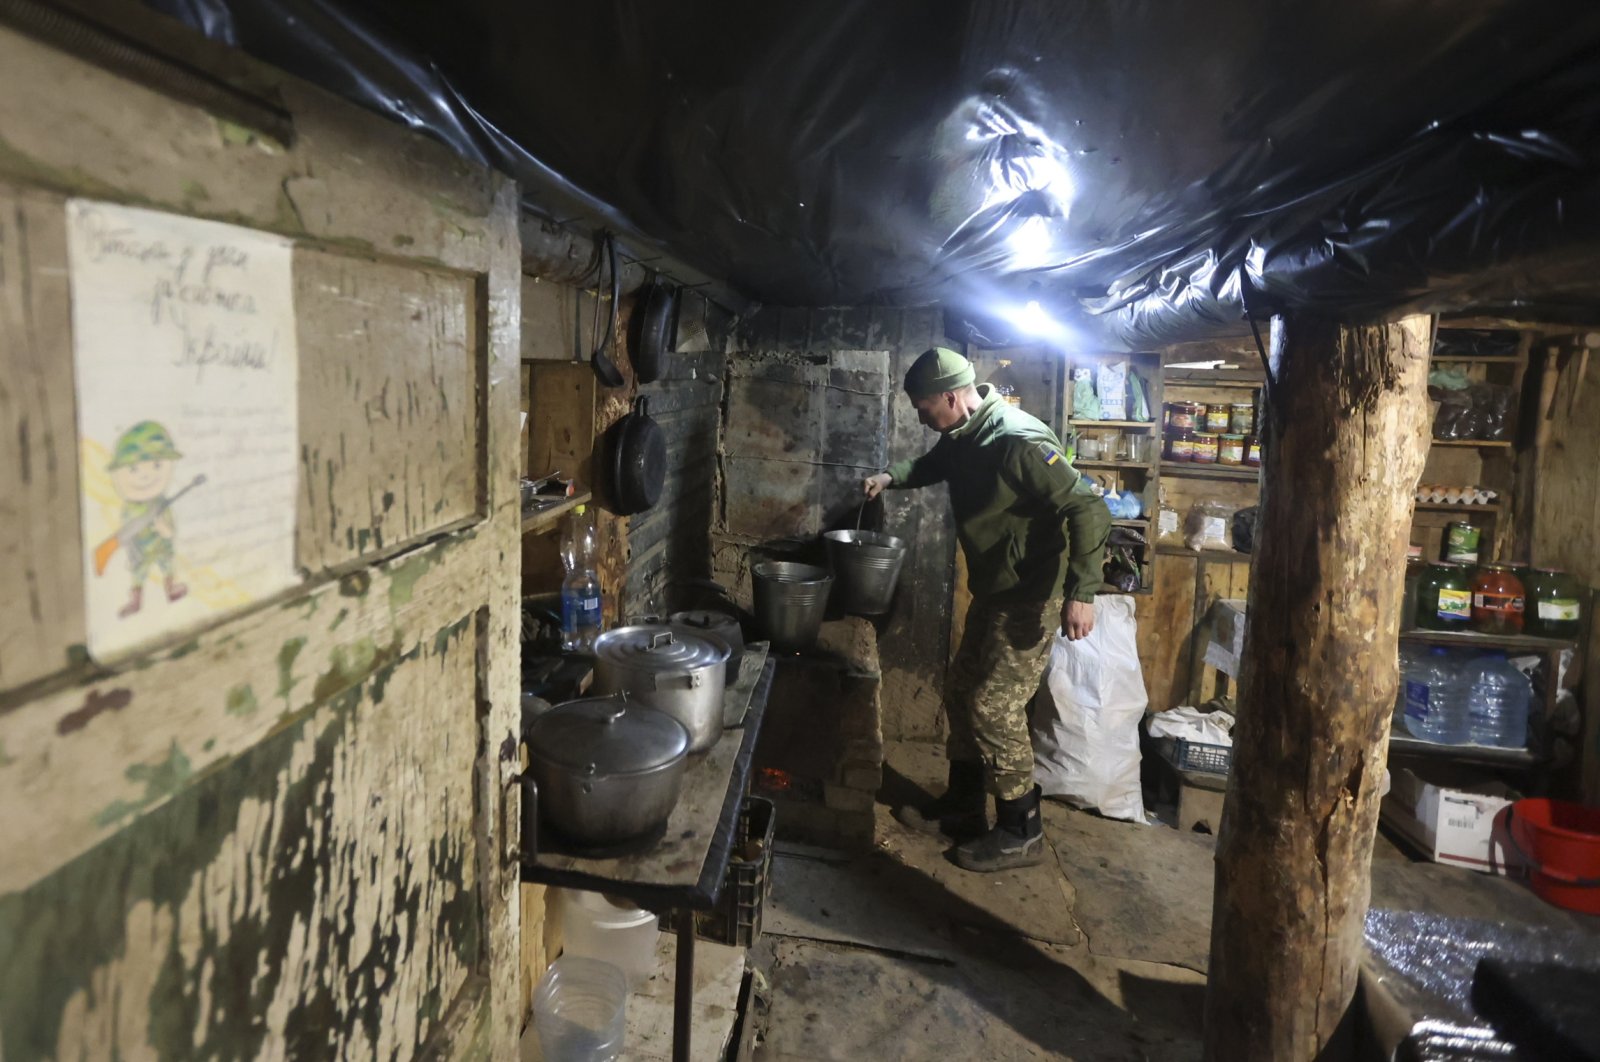 A Ukrainian soldier cooks in a shelter near a fighting position on the line of separation from pro-Russian rebels near Debaltsevo, Donetsk region, Ukraine, Dec. 3, 2021. (AP Photo)